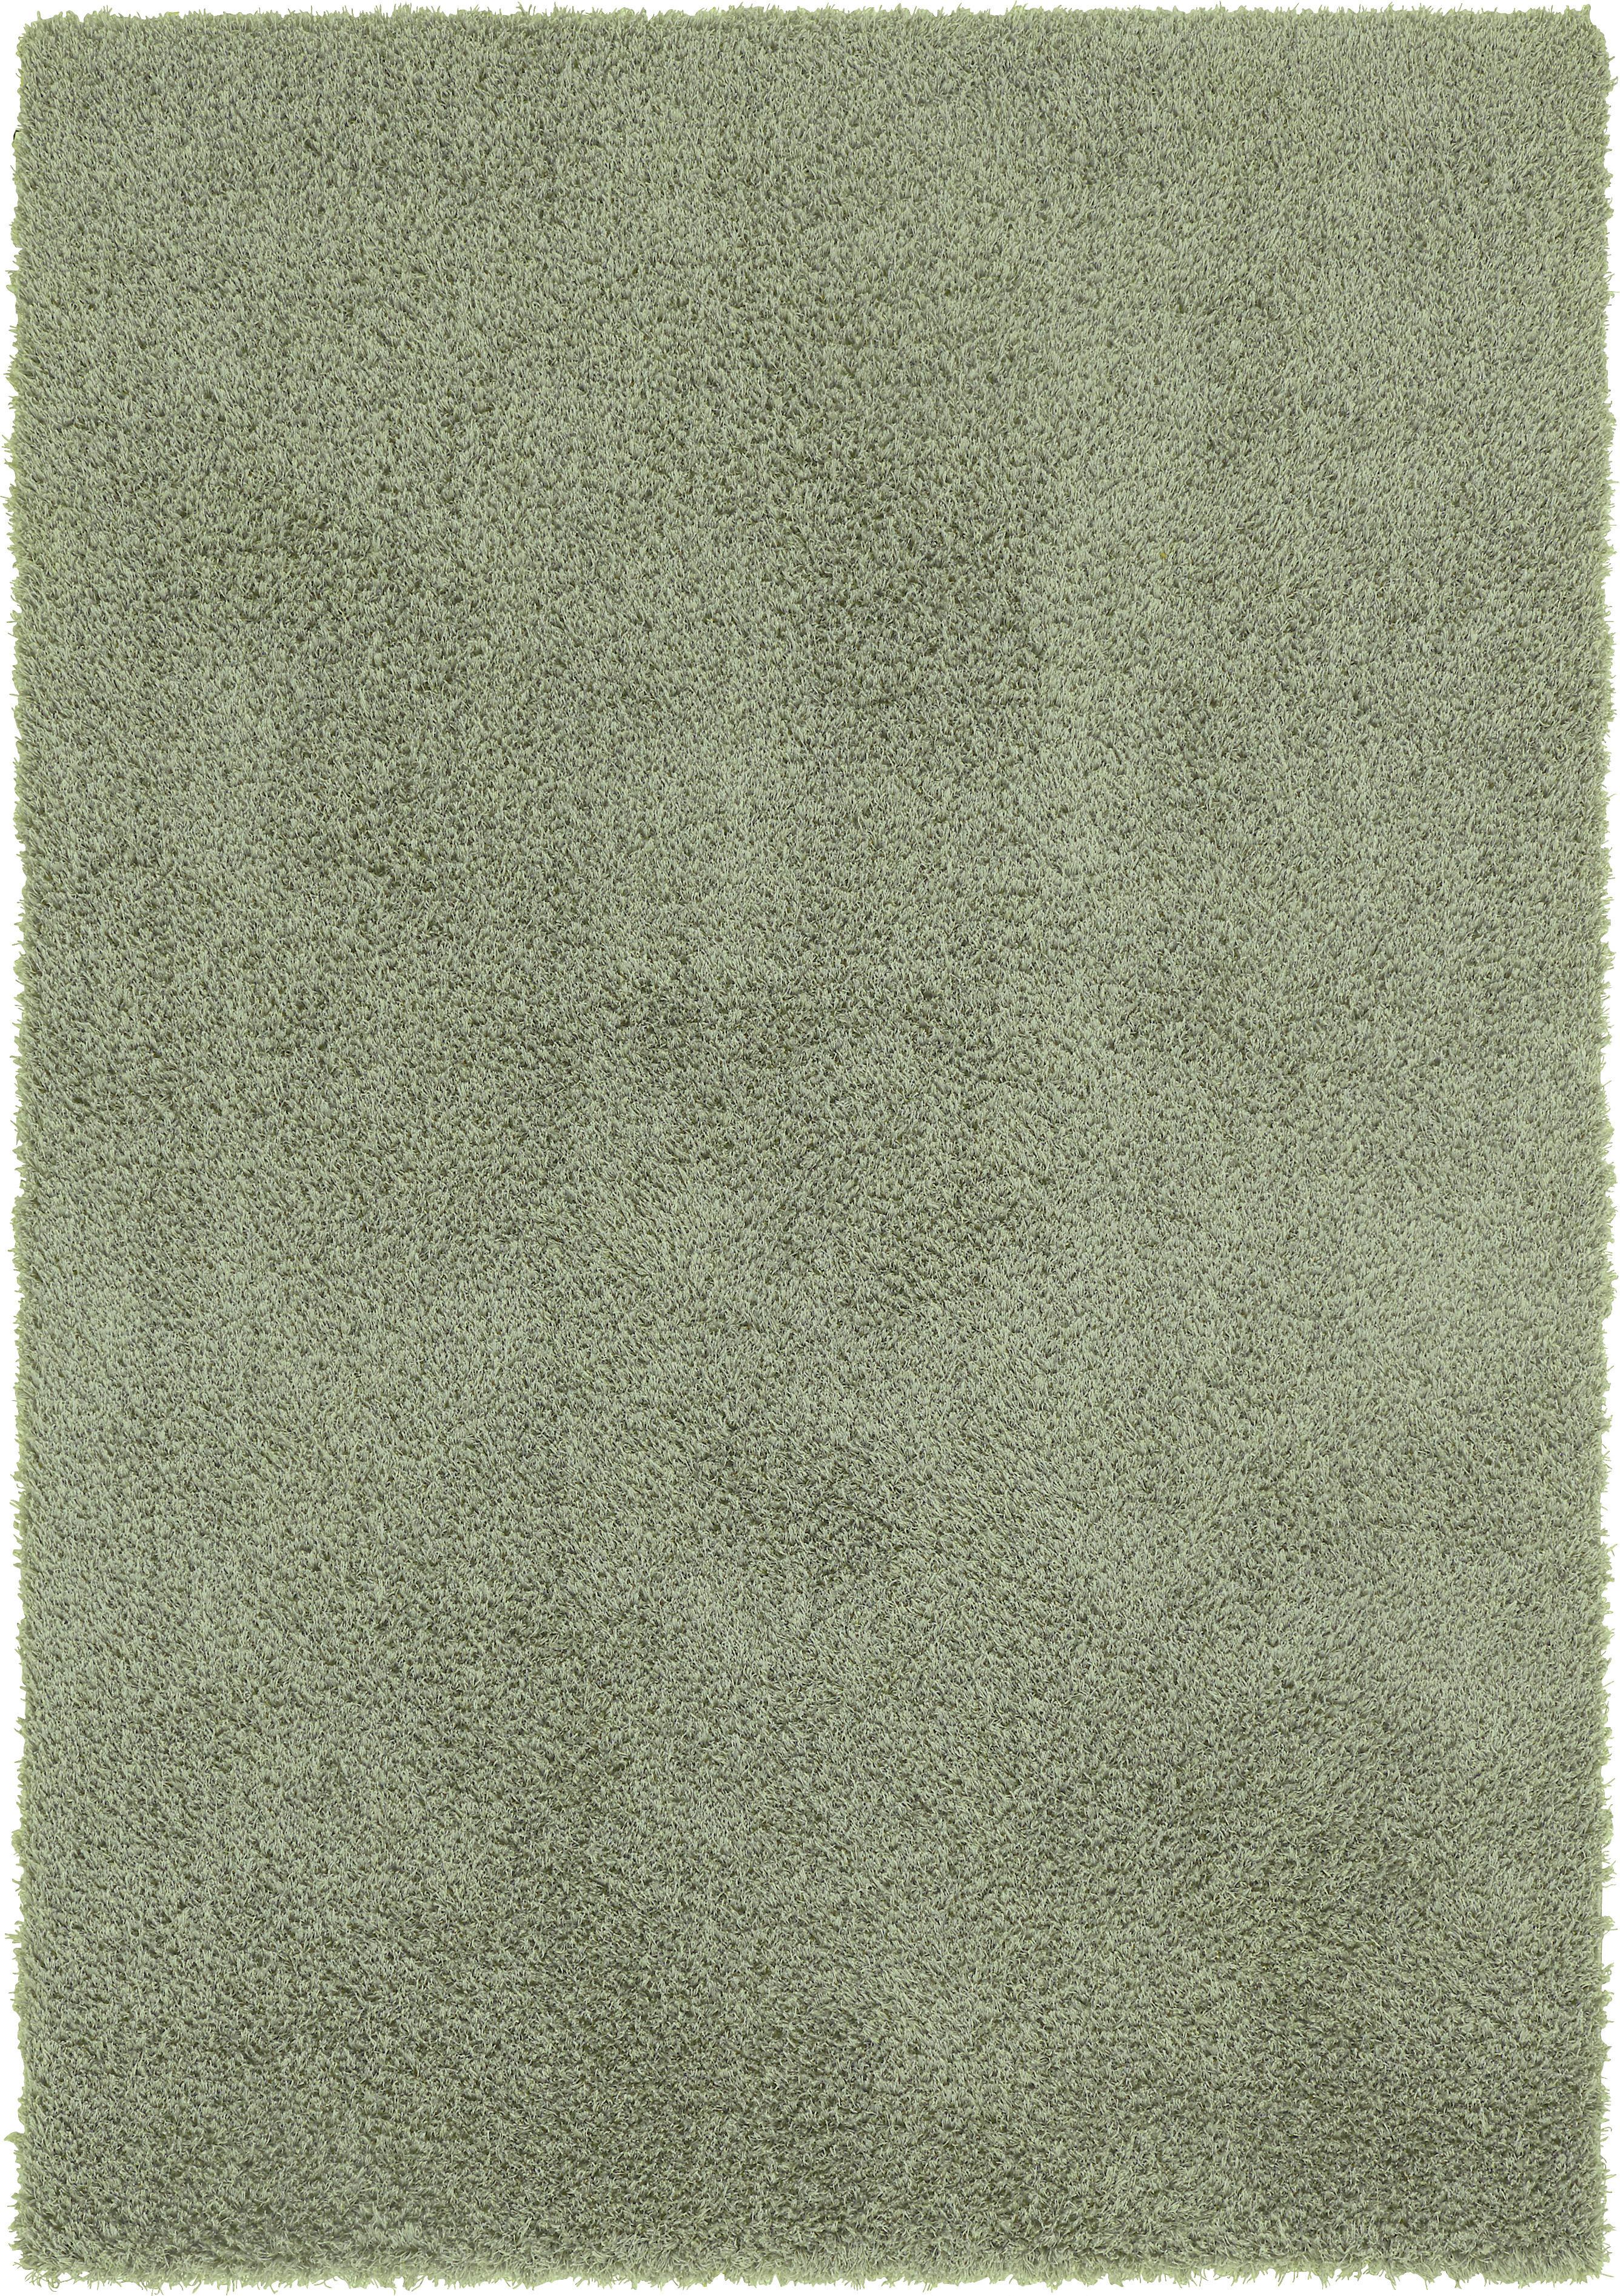 Covor Shaggy Stefan 3 - verde, Modern, textil (160/230cm) - Modern Living